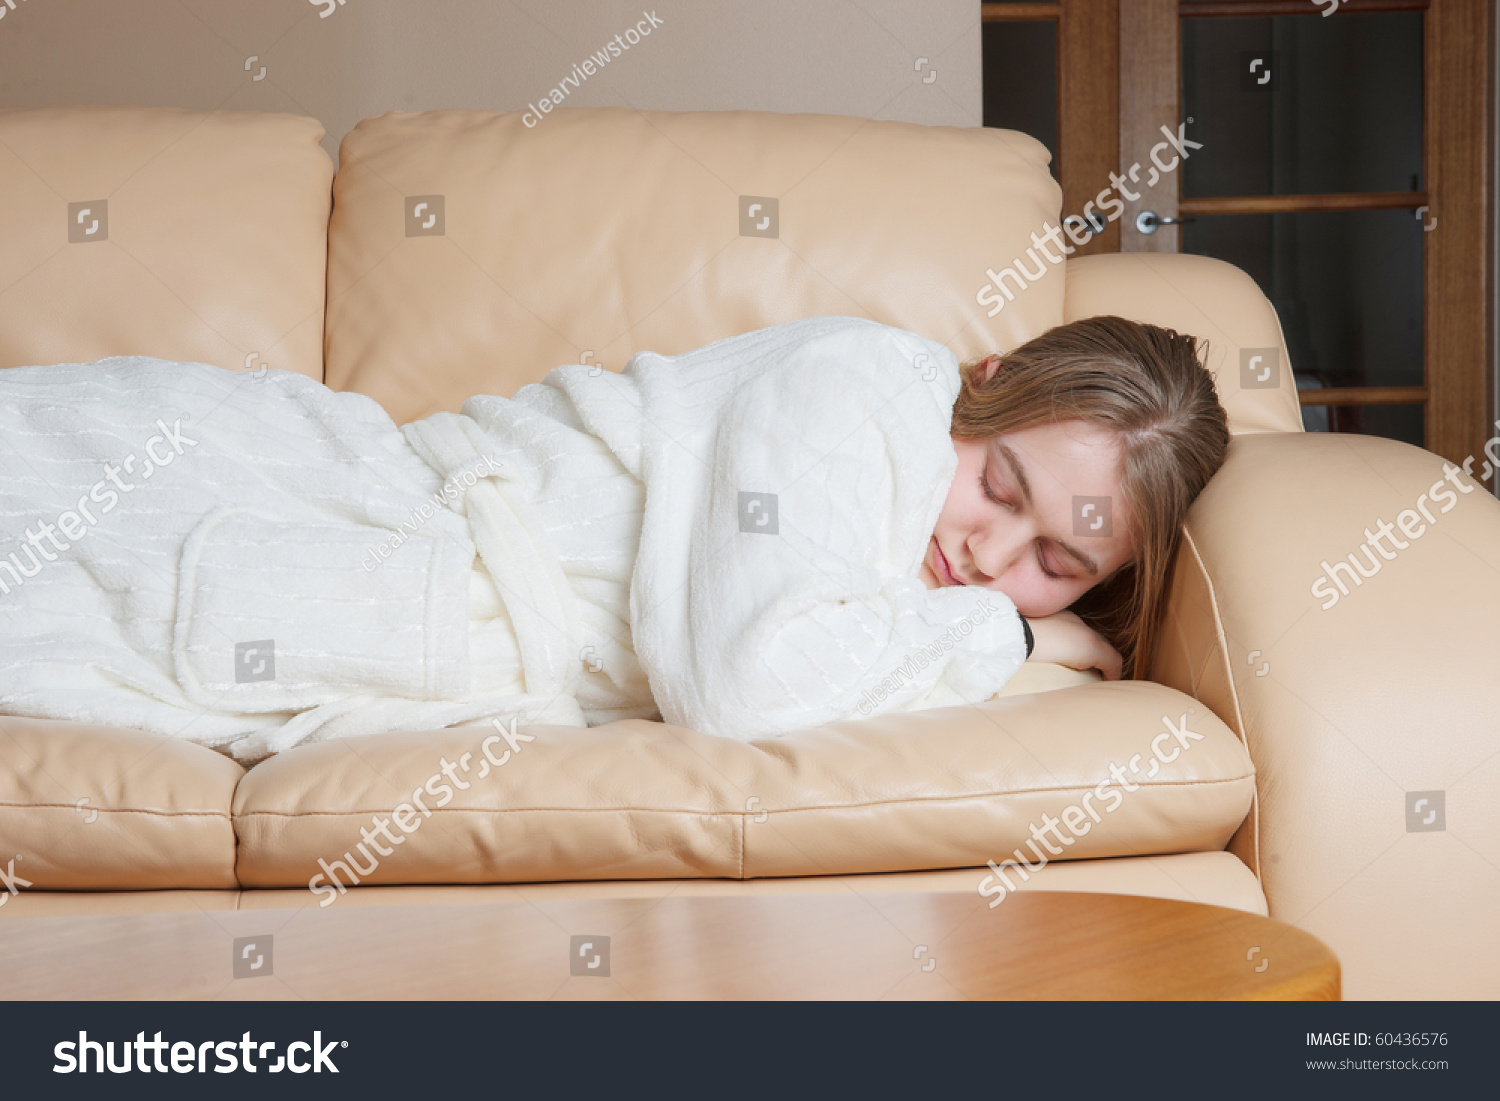 Тетке на диване. Засыпающая девушка на диване.